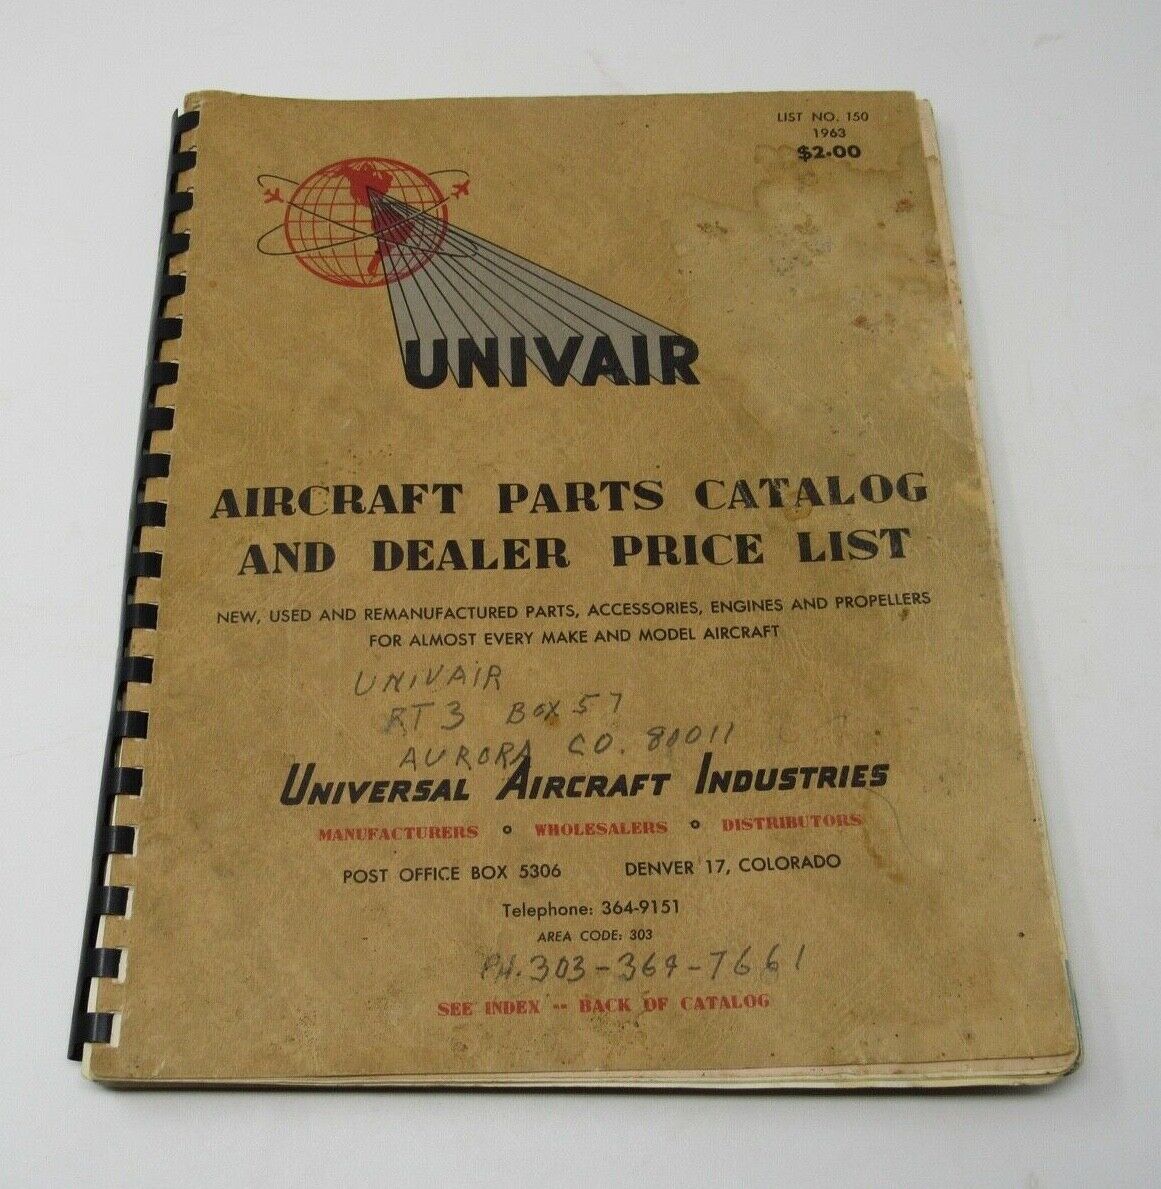 UNIVAIR AIRCRAFT PARTS CATALOG & DEALERS PRICE LIST SALES MANUAL 1963 PROPELLERS